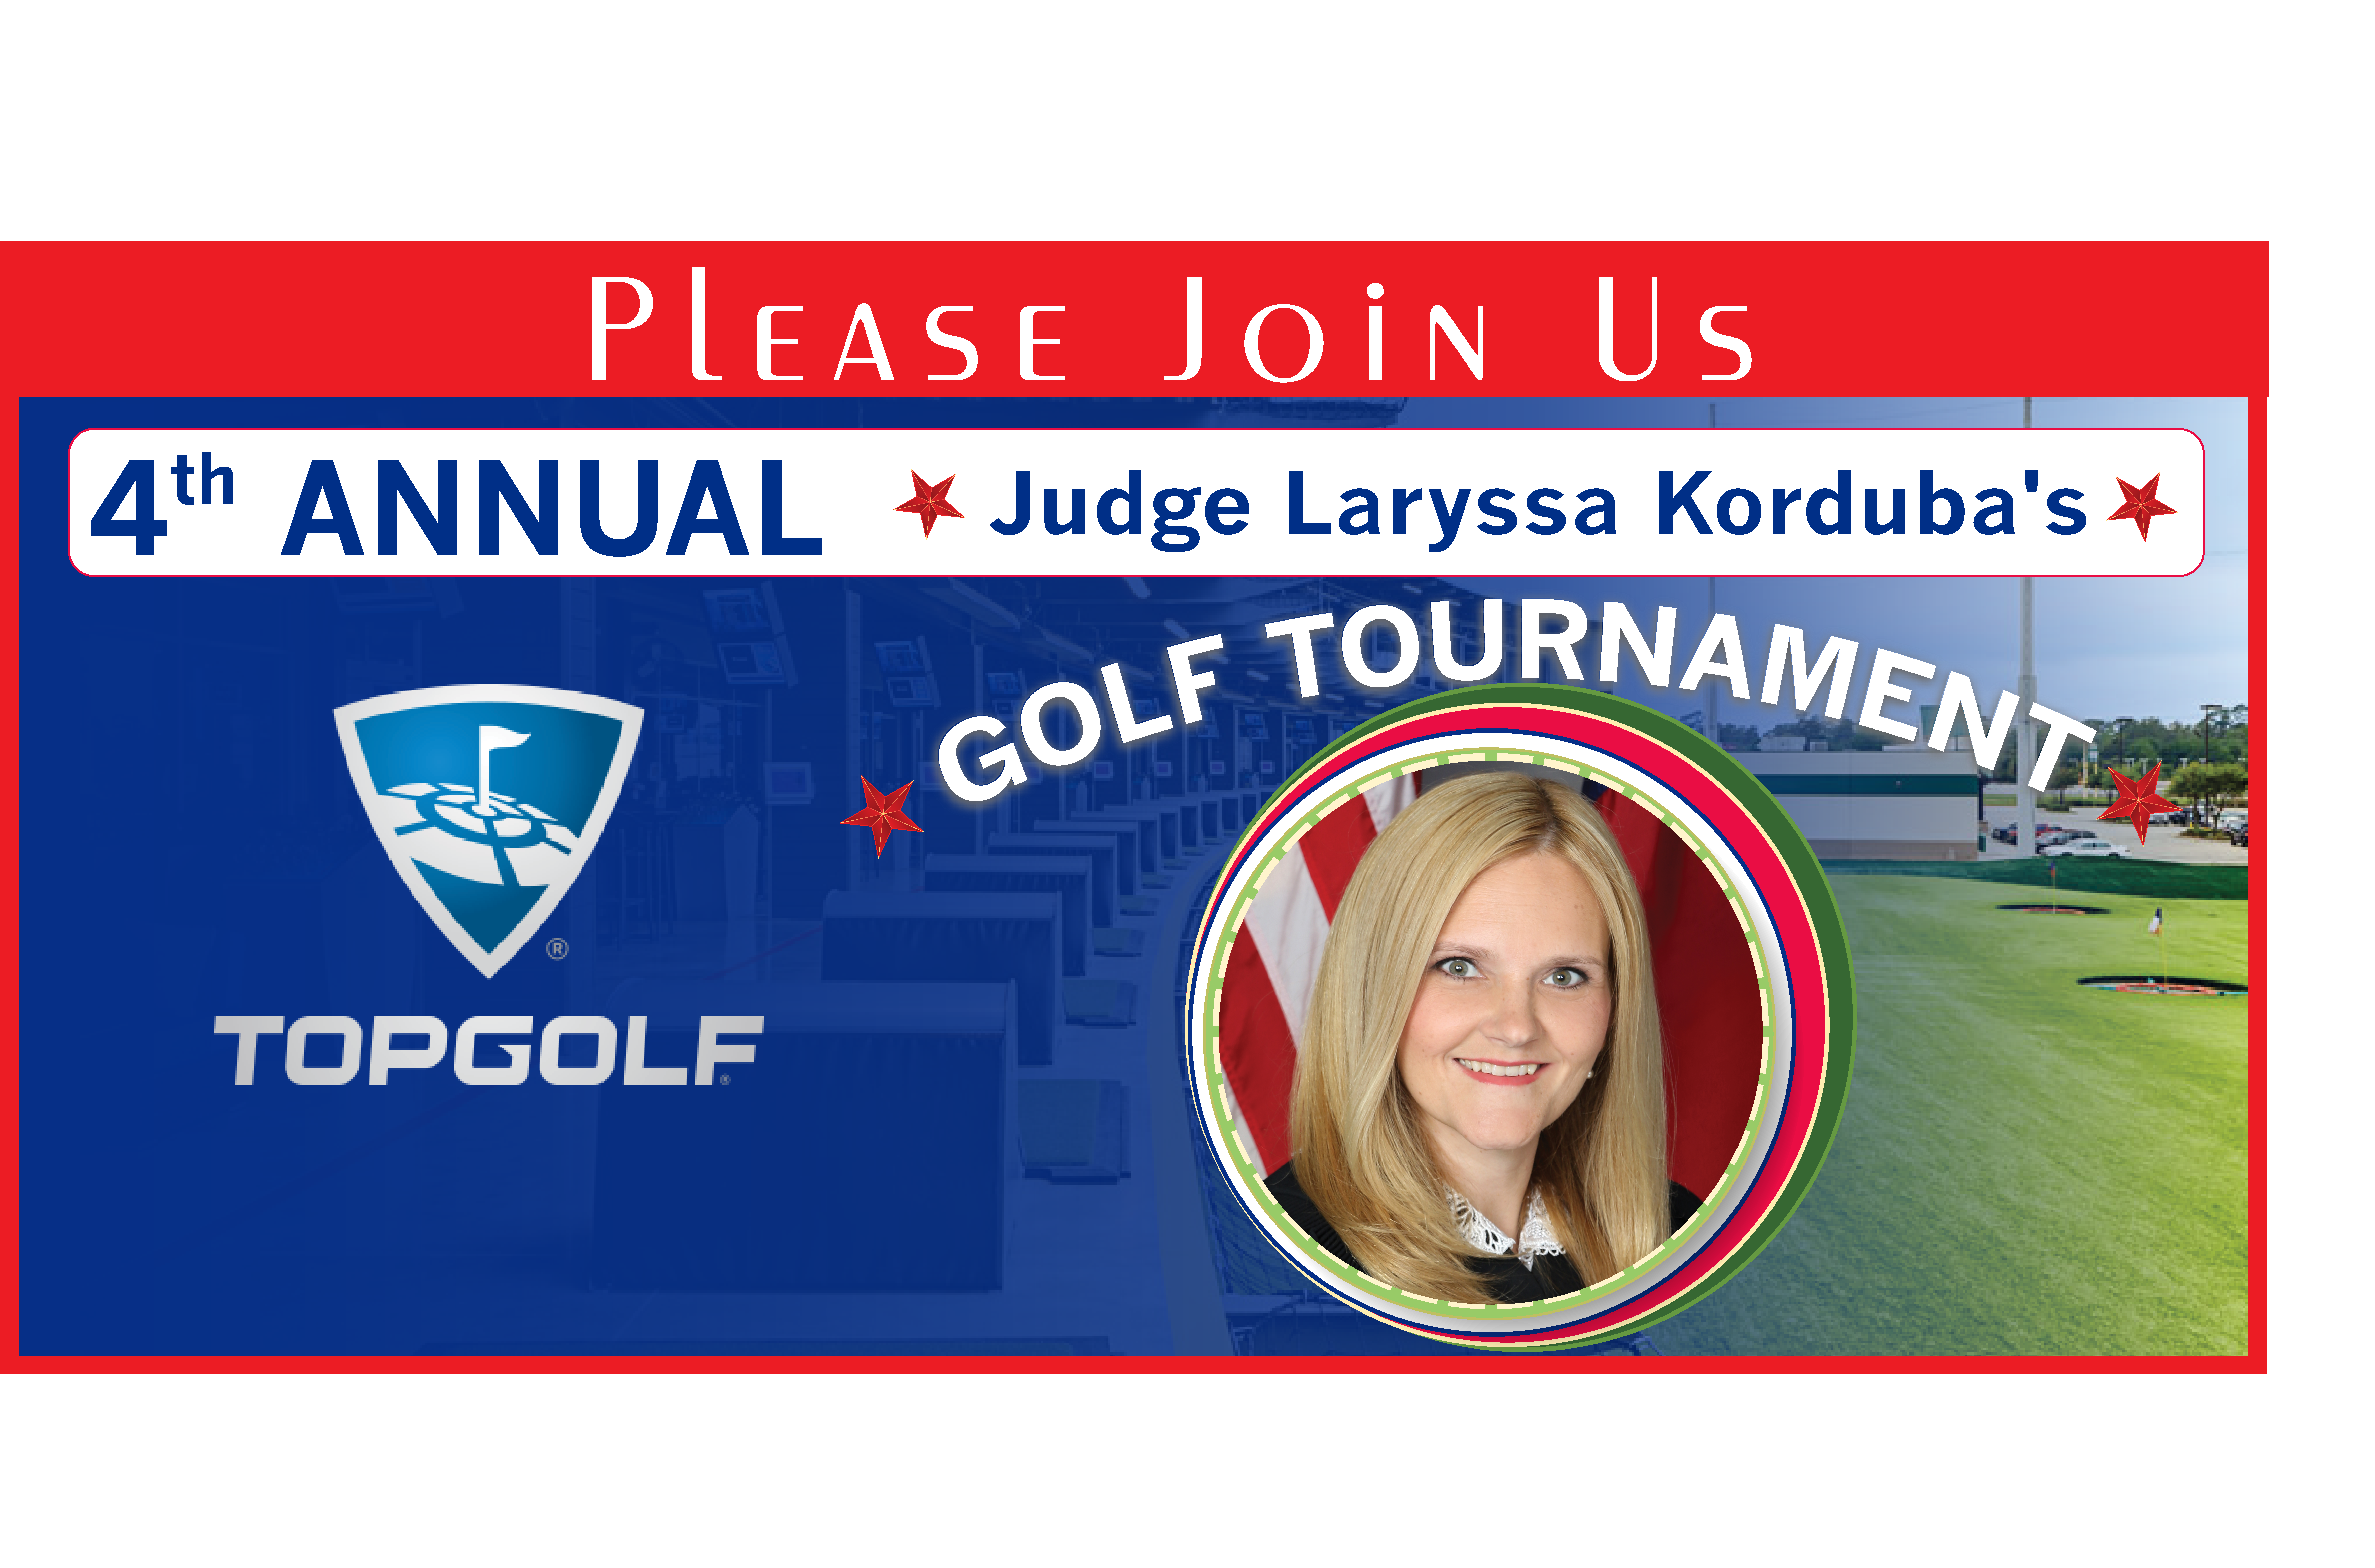 4th Annual Judge Laryssa Korduba's TOPGOLF Golf Tournament